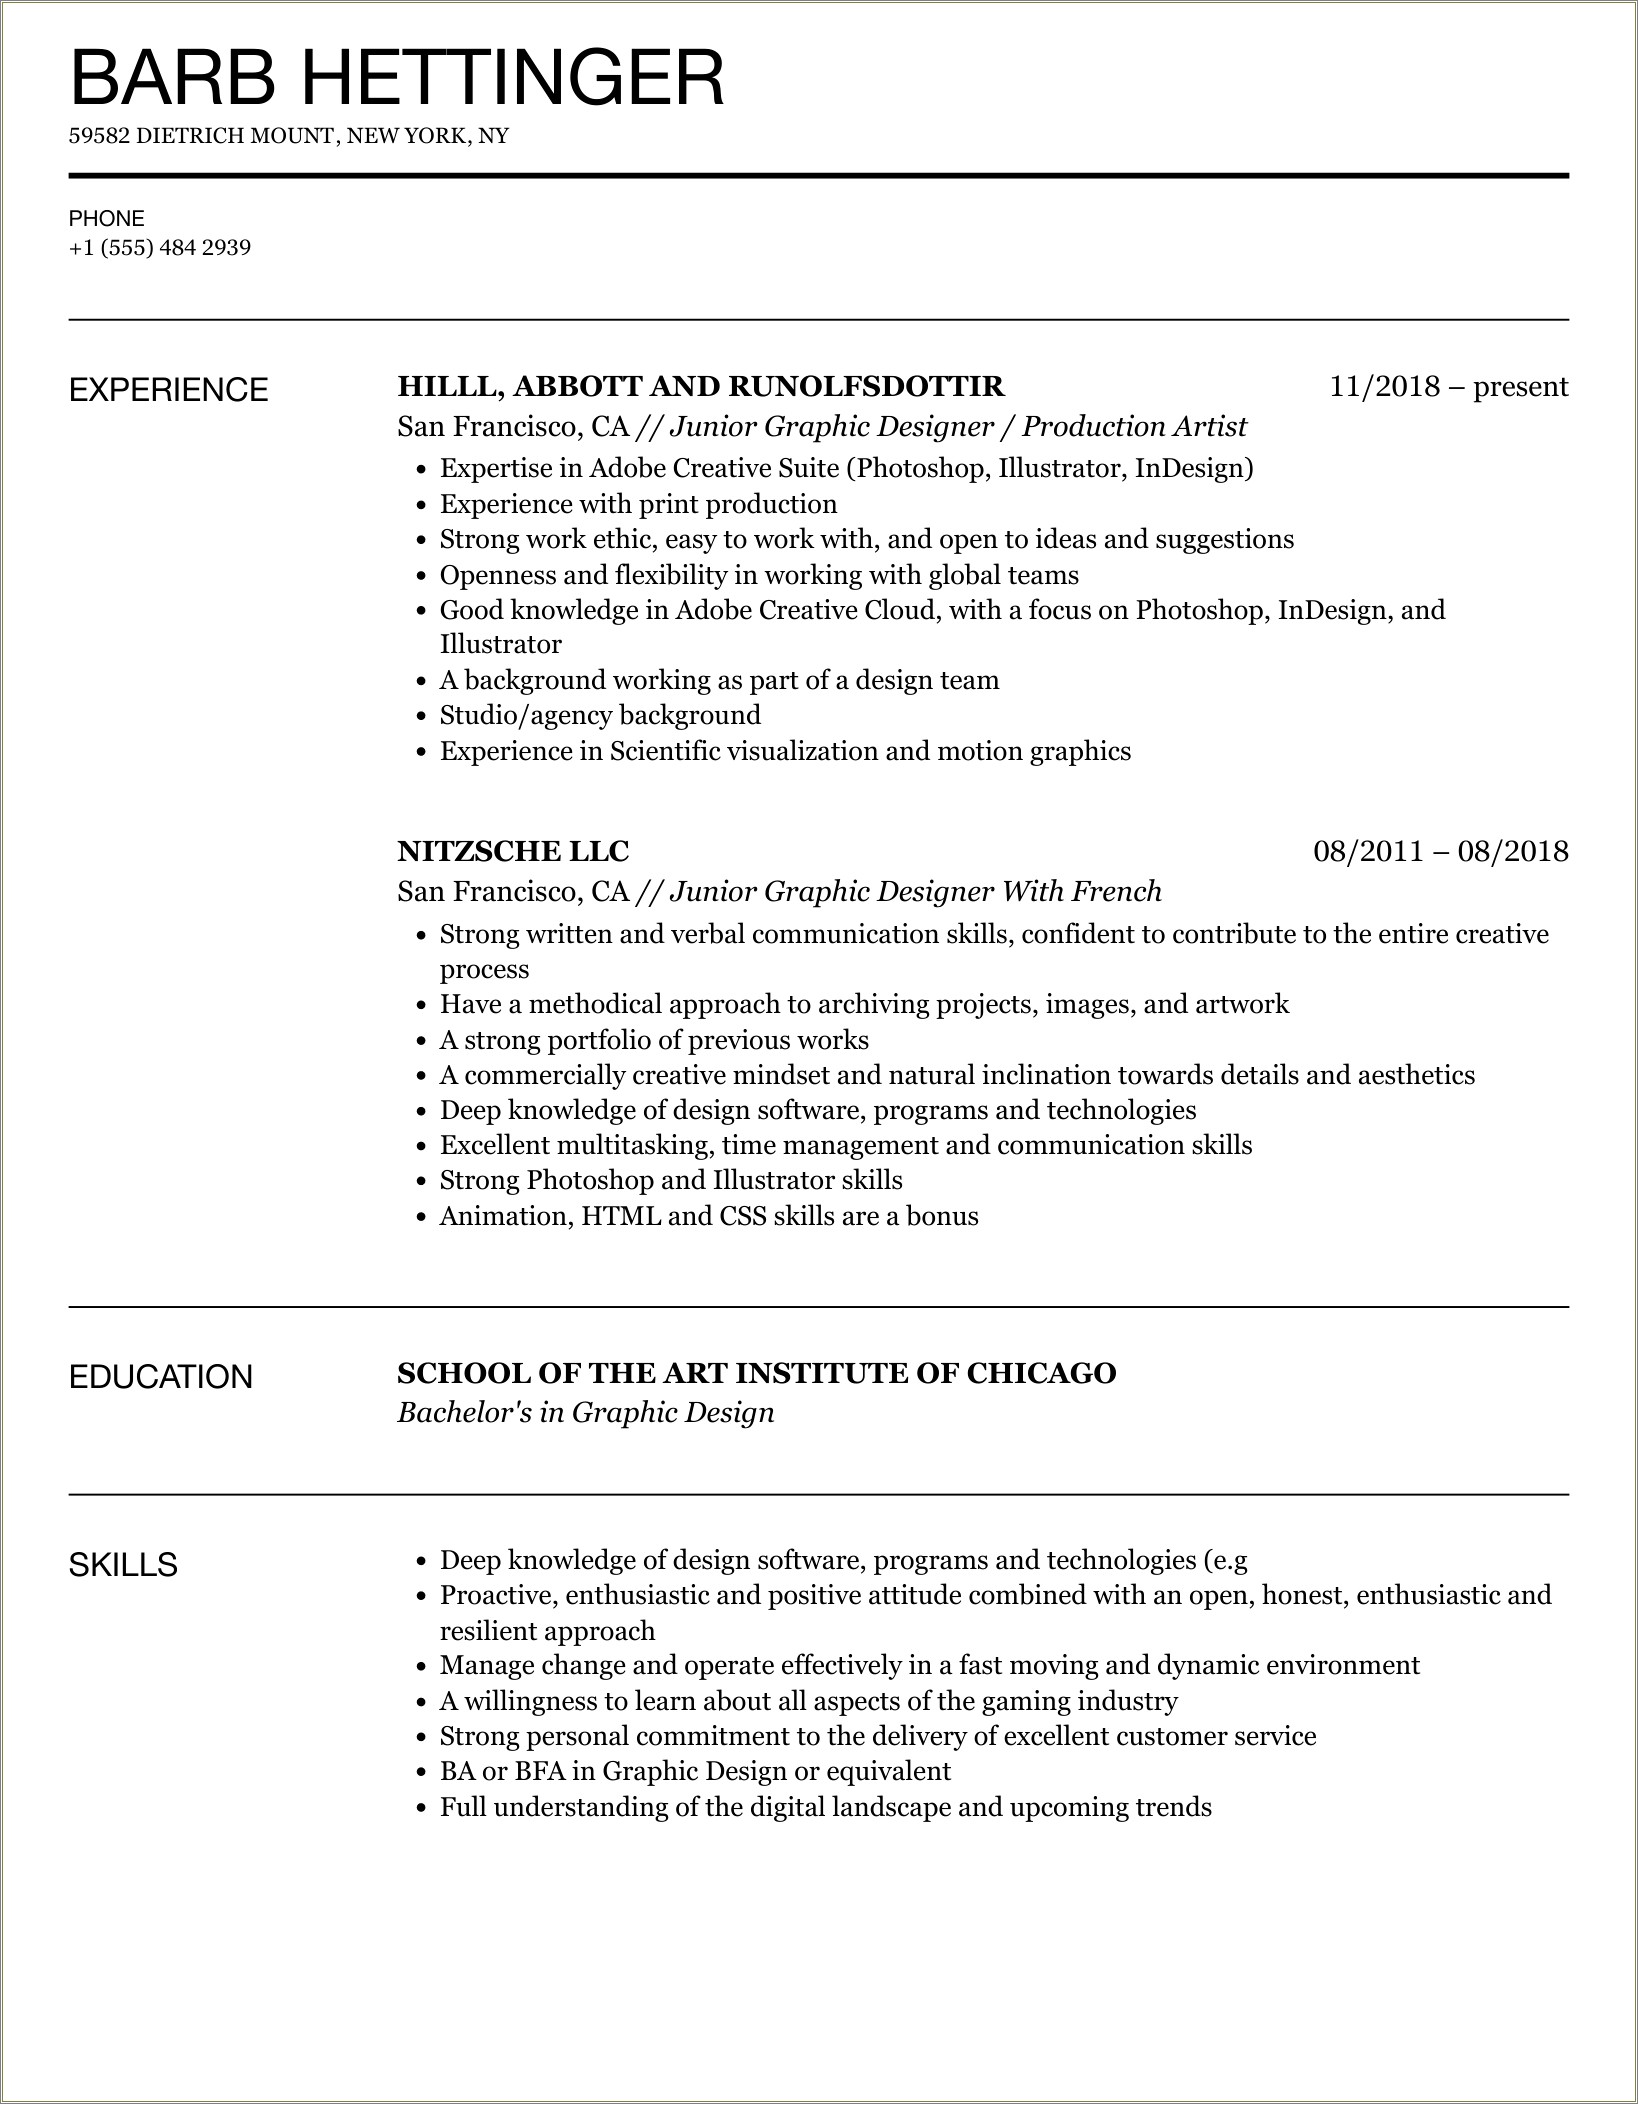 Resume Of A Graphic Designer Sample